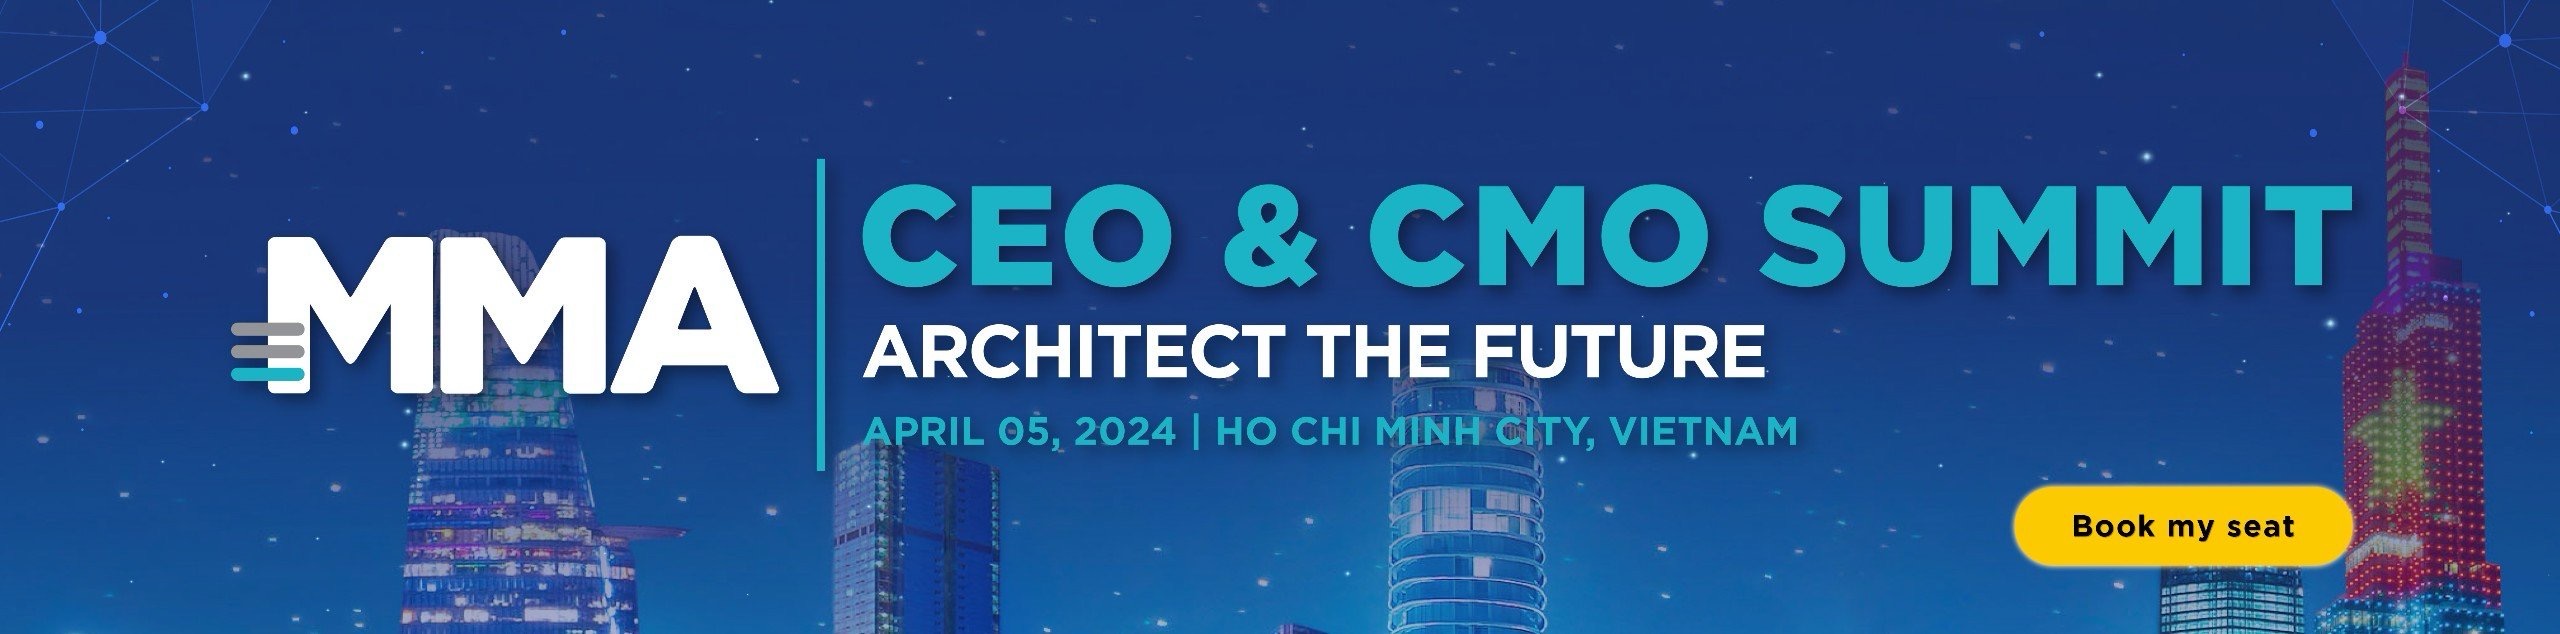 CEO & CMO Summit